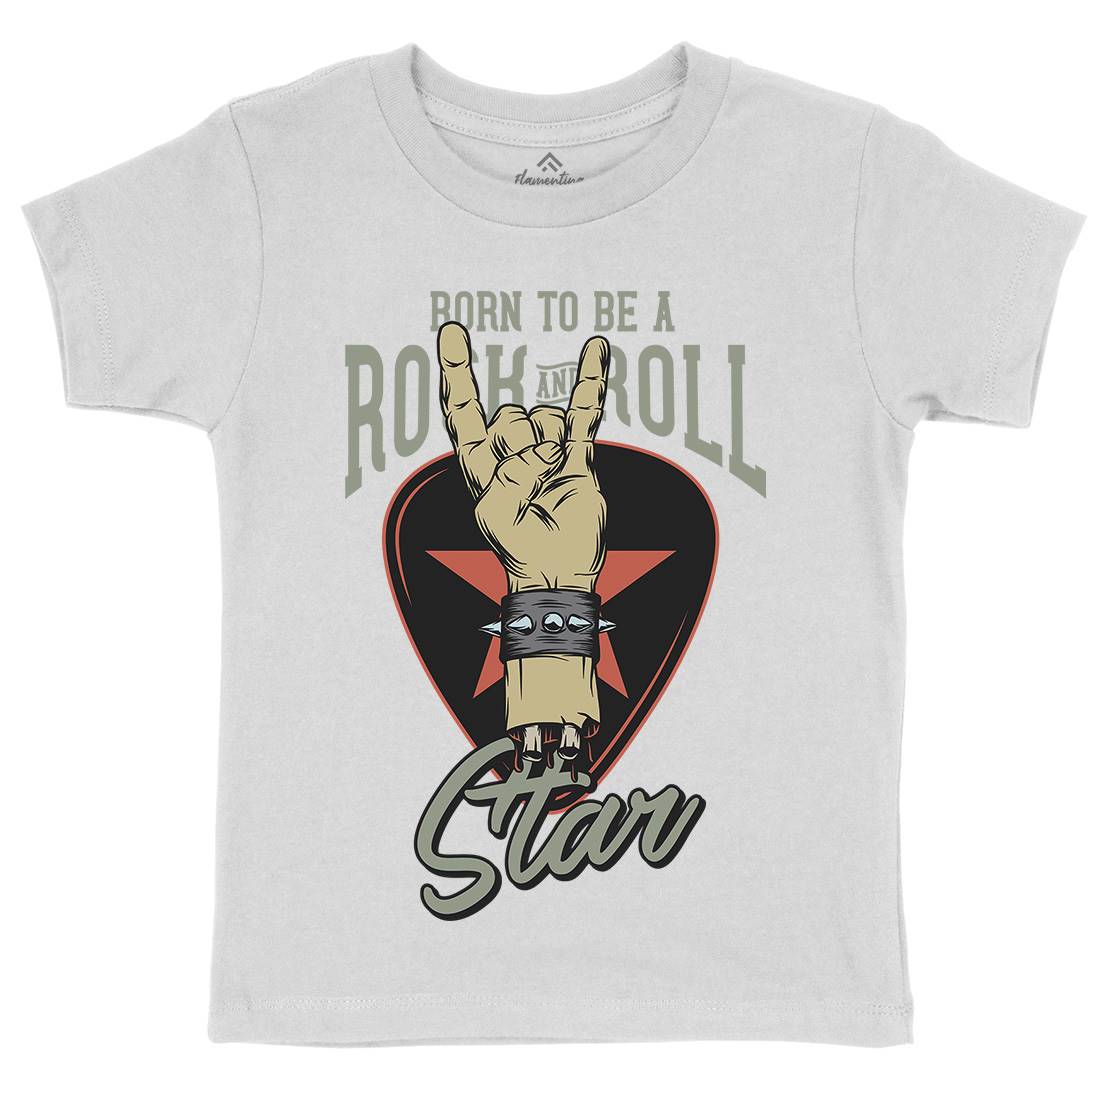 Rock And Roll Star Kids Crew Neck T-Shirt Music D965